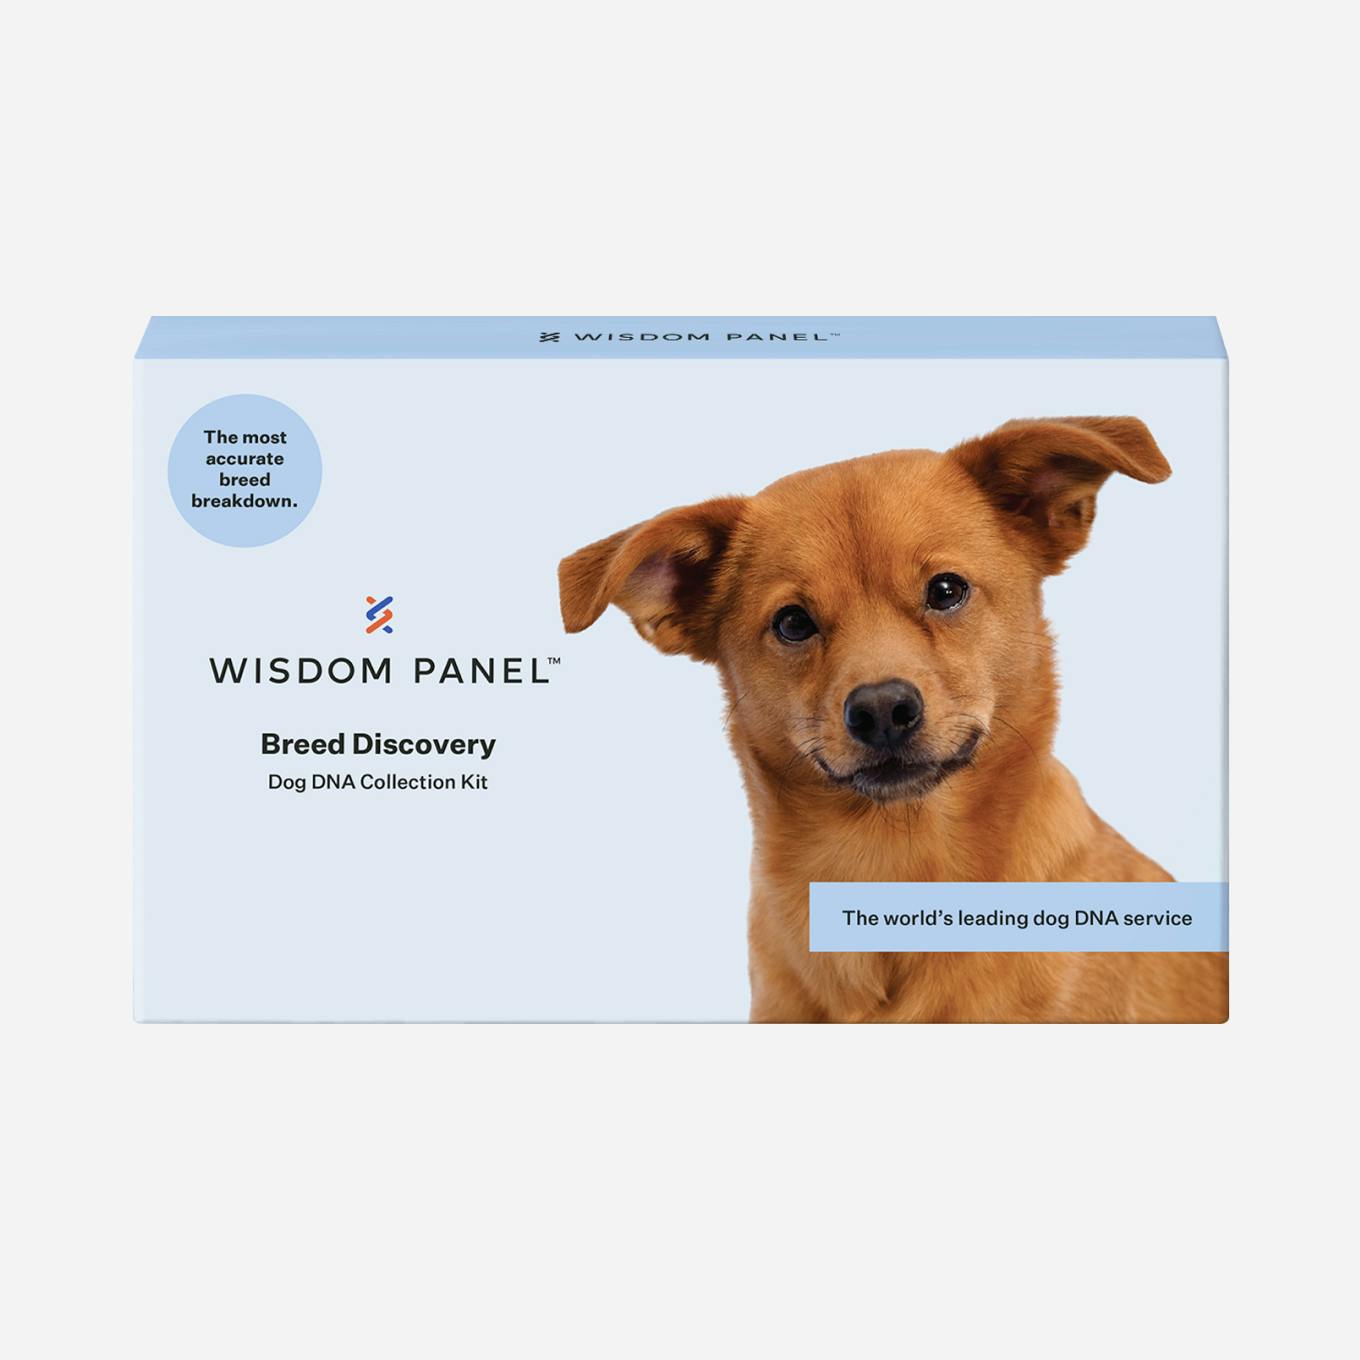 Wisdom Panel Premium dog DNA test collection kit